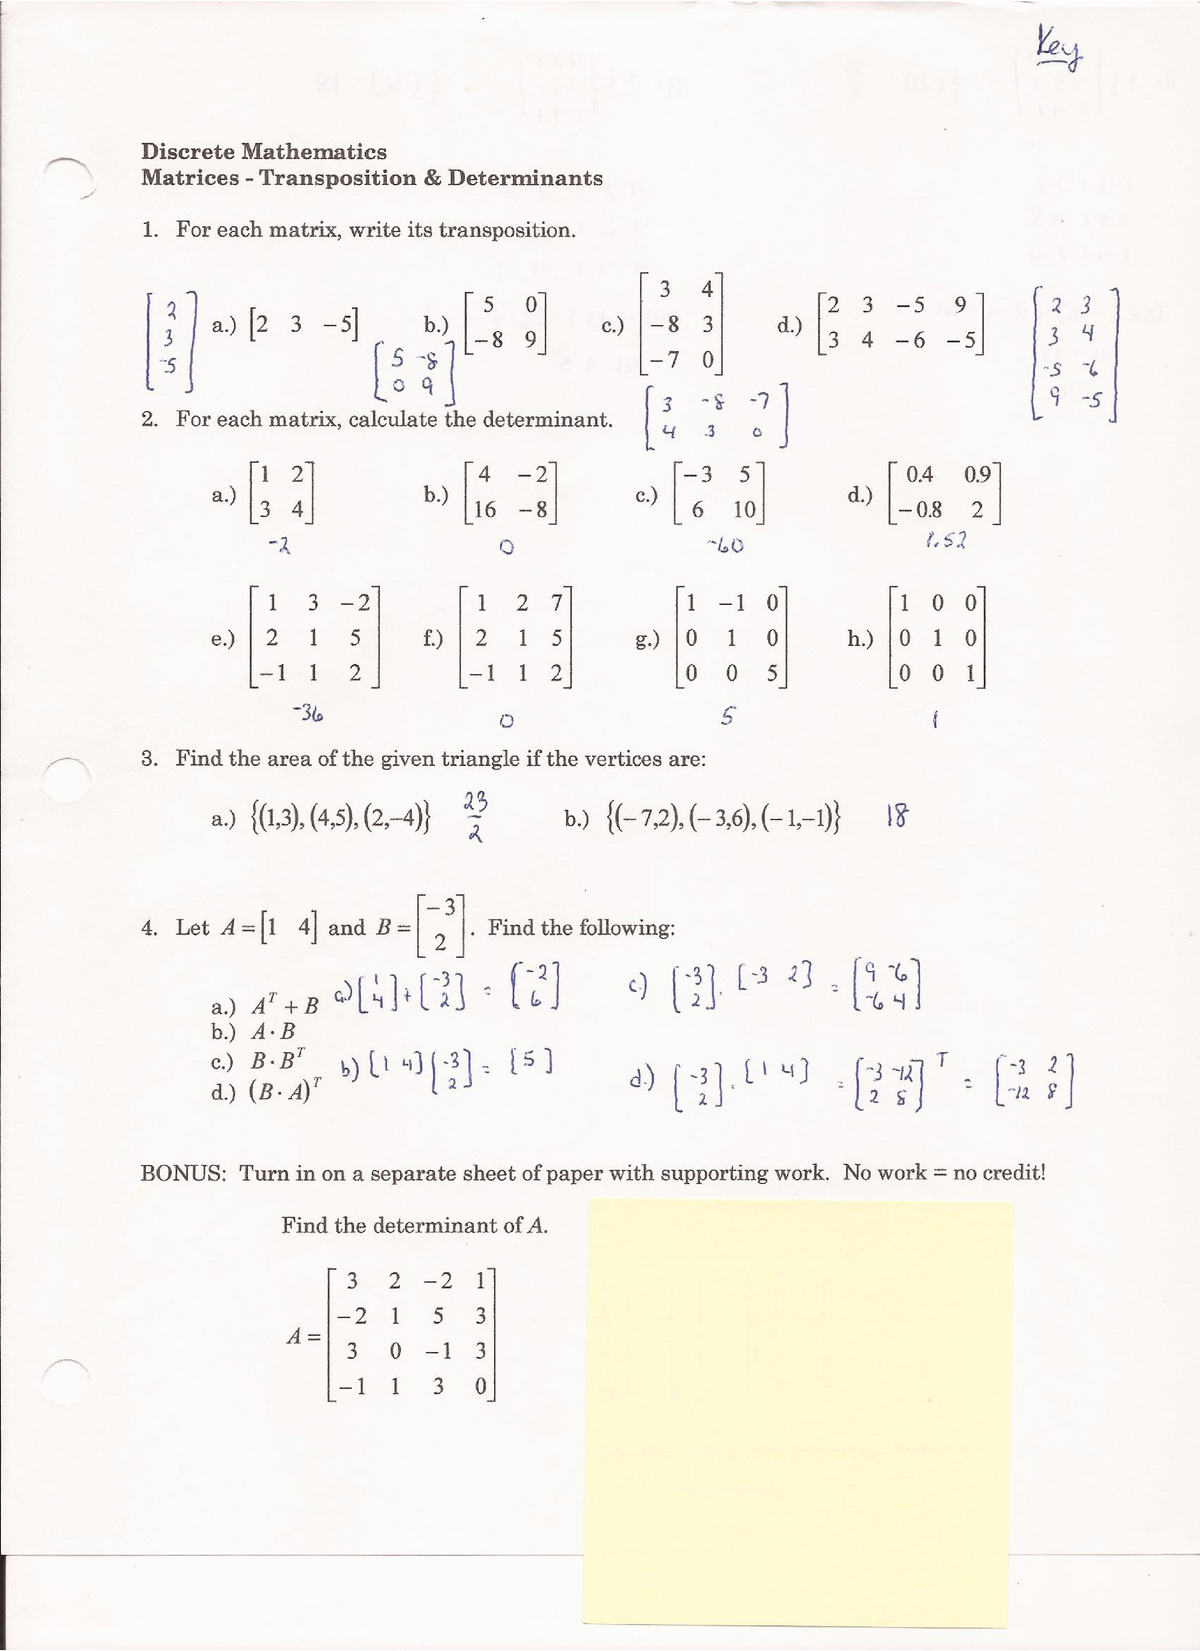 solutions-transposition-determinants-worksheet-math-34600-studocu